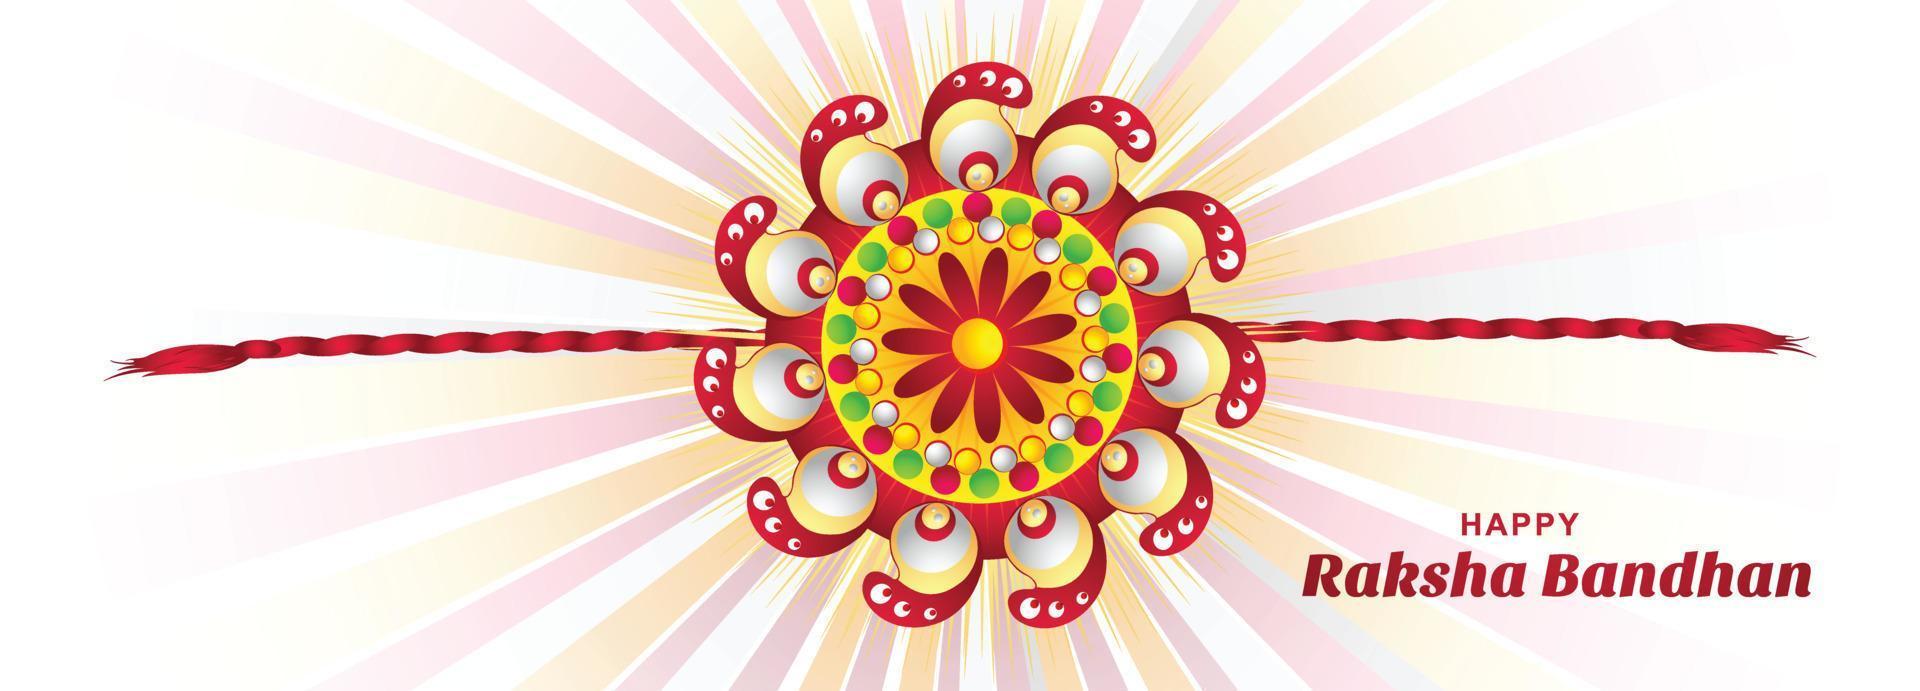 Beautiful hindu festival raksha bandhan card banner background vector